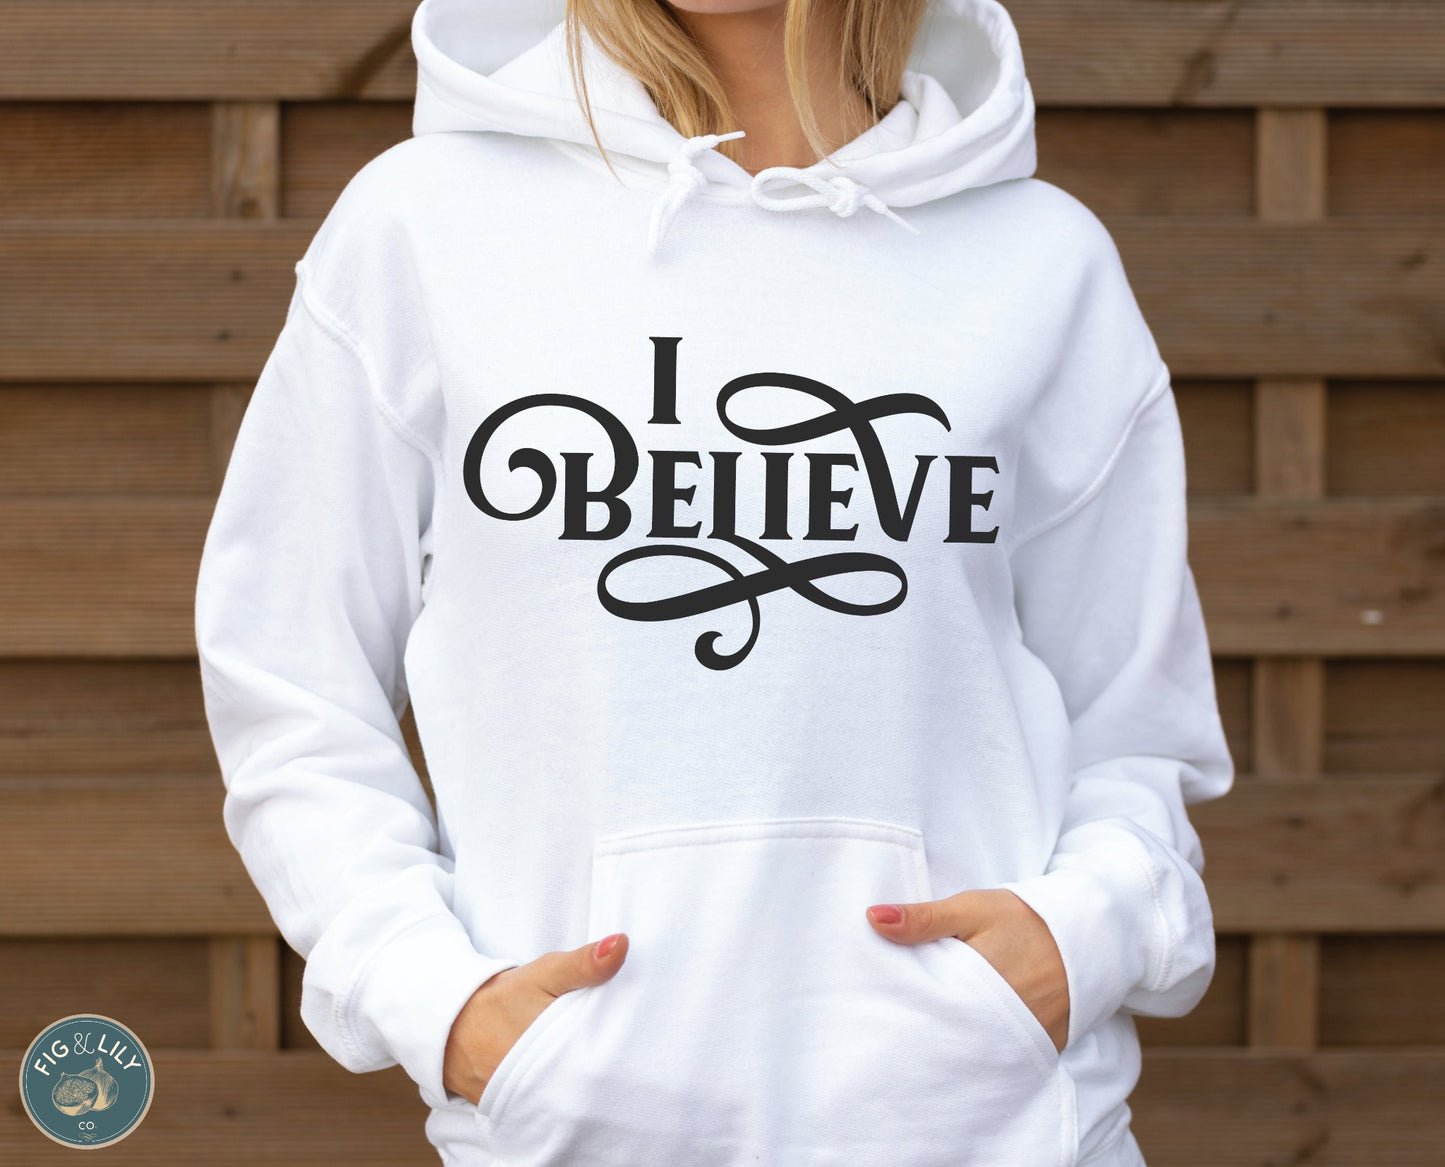 I Believe Swirl Christian aesthetic Jesus believer design printed in black on soft white unisex hoodie sweatshirt for women, great gift for her